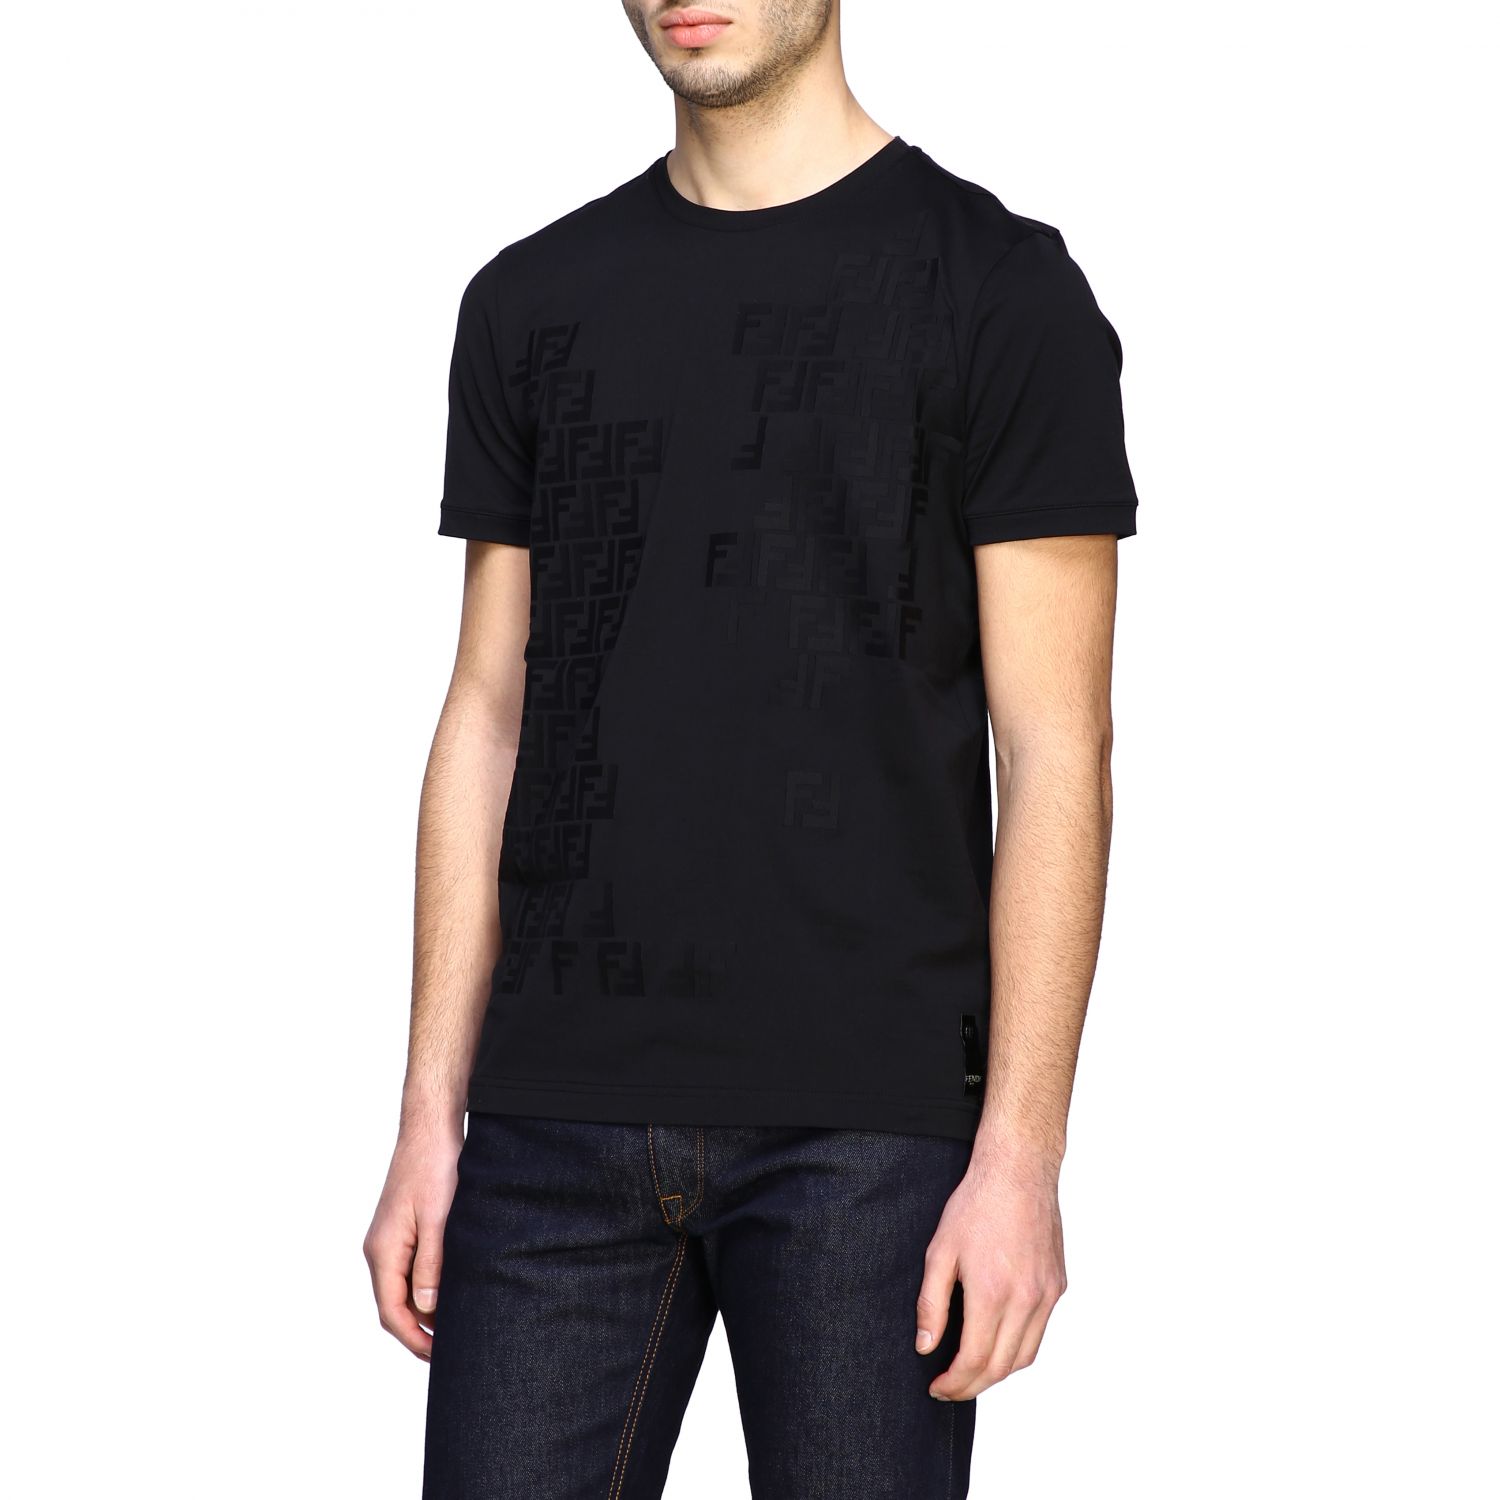 FENDI: crew-neck t-shirt with FF monogram - Black | Fendi t-shirt ...